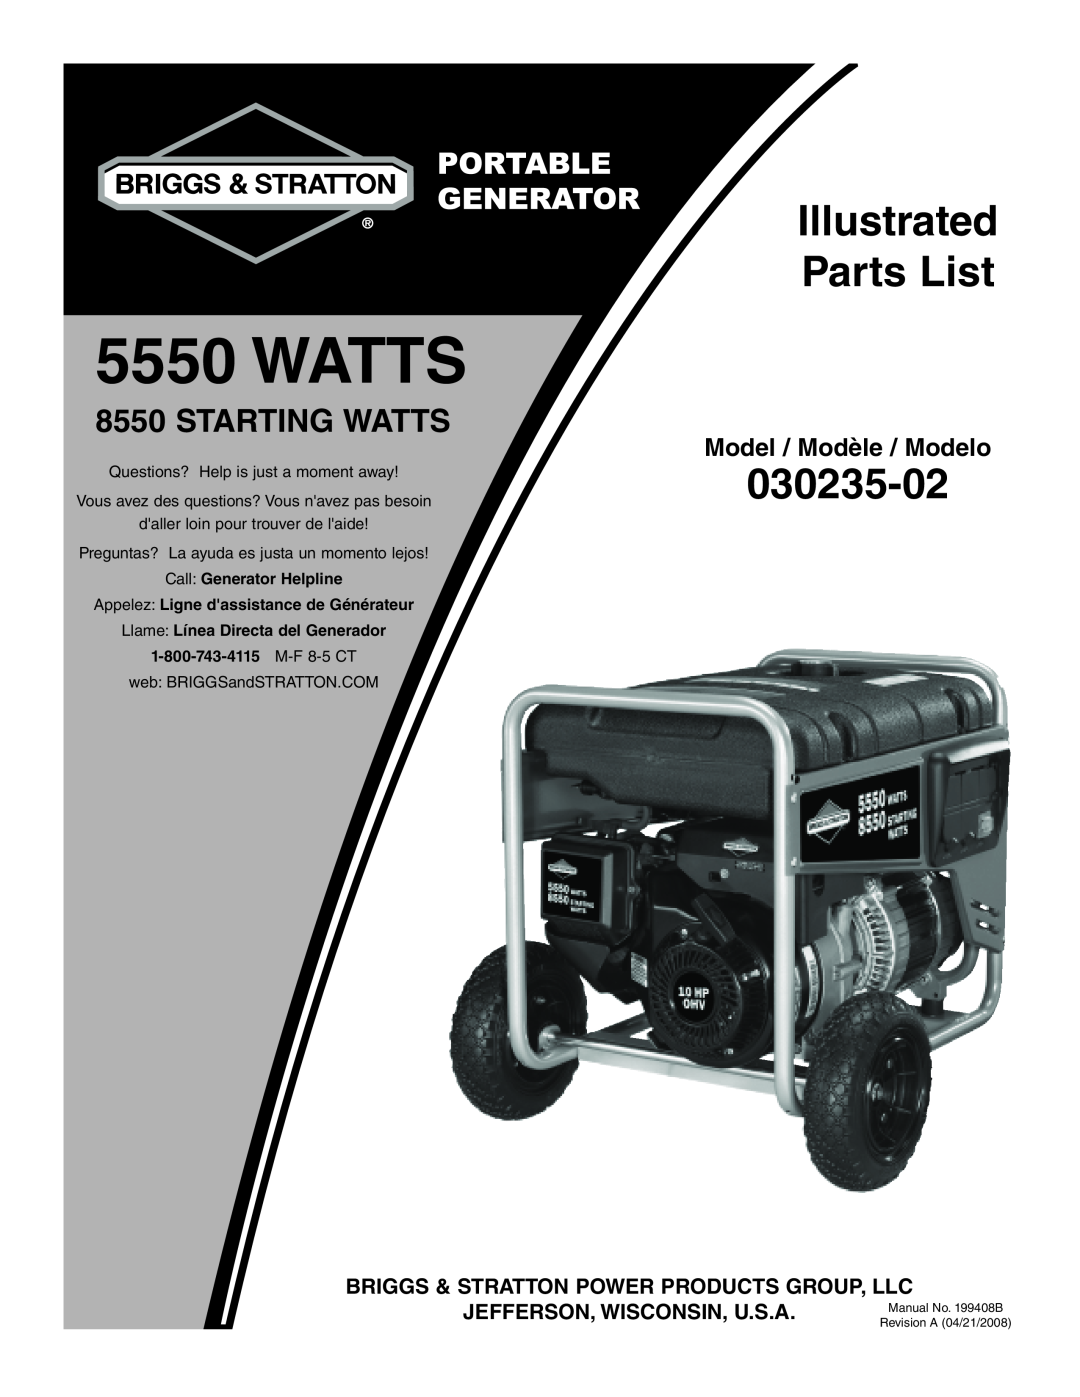 Briggs & Stratton 030235-02 manual Starting Watts, Illustrated Parts List, Model / Modèle / Modelo, M-F 8-5CT 